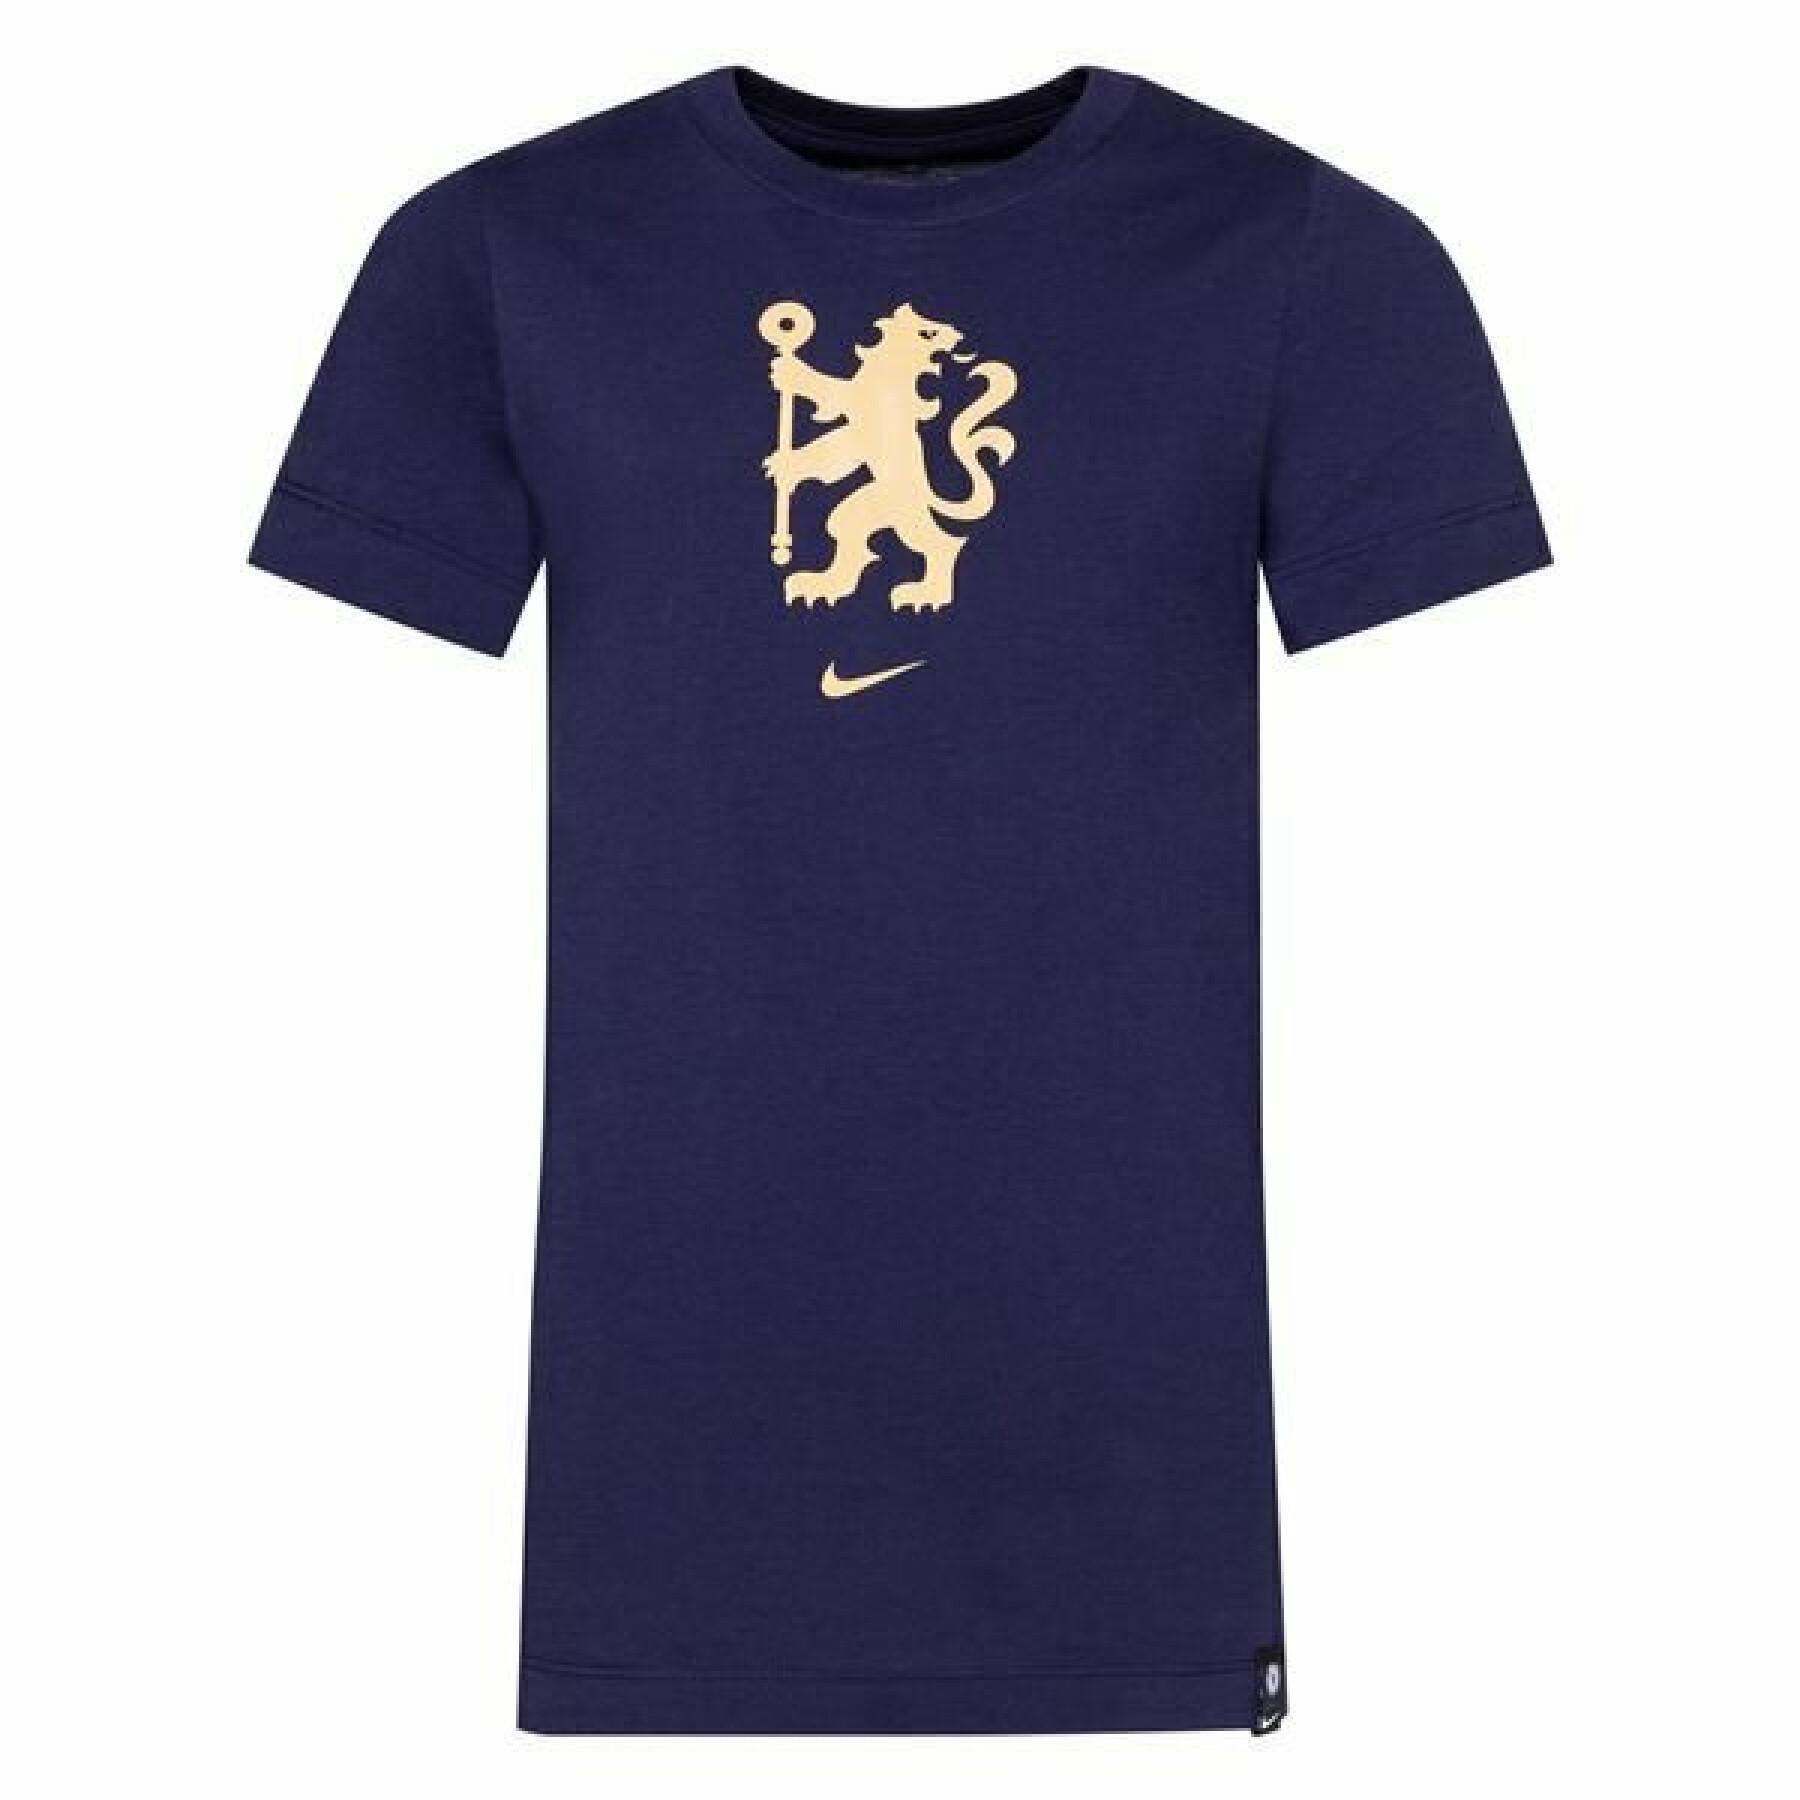 Koszulka dziecięca Chelsea 2021/22